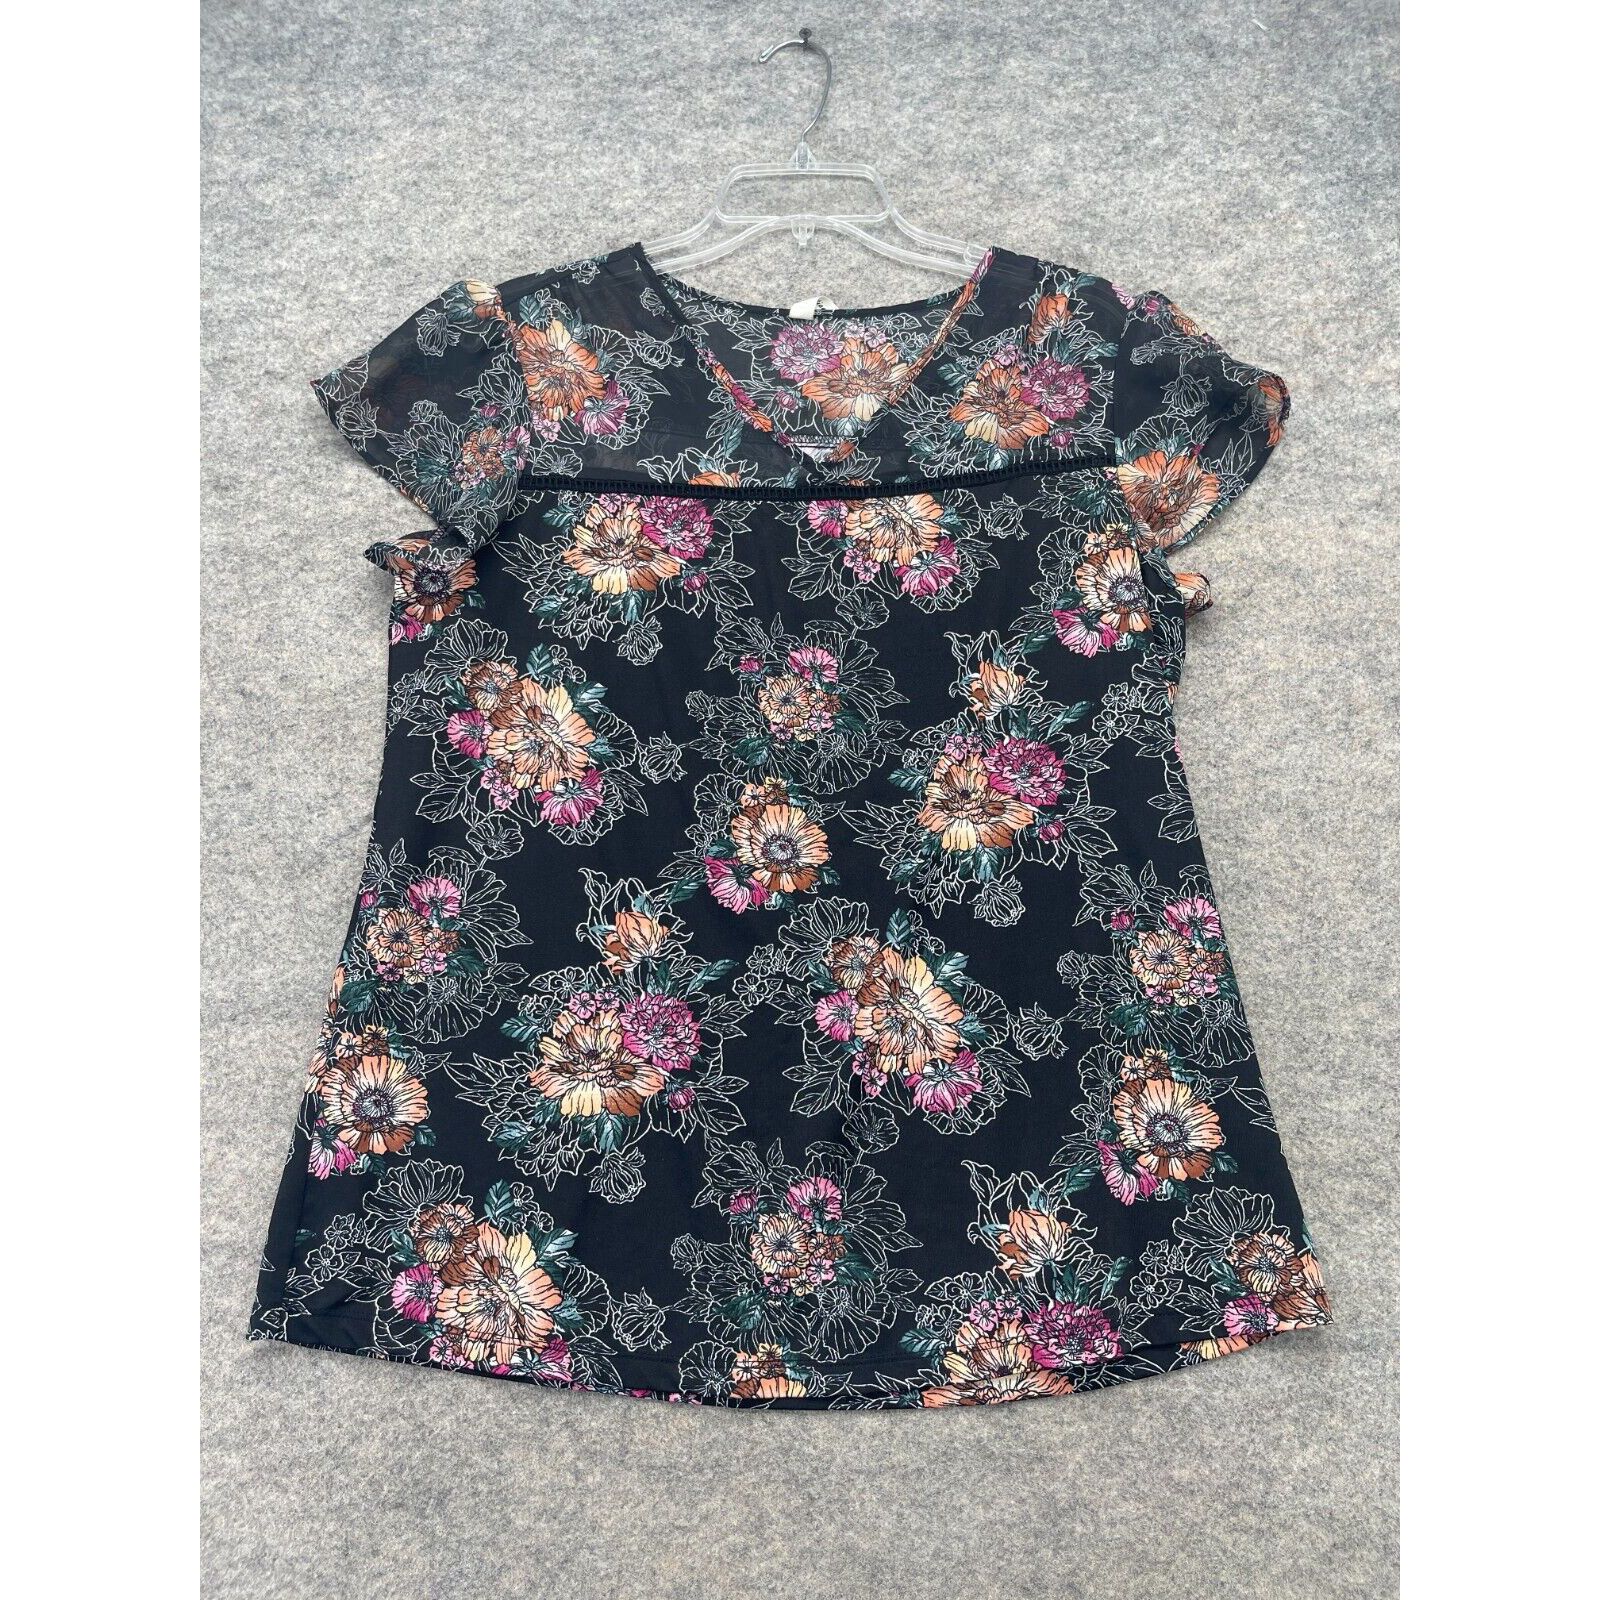 Pinko Perseption Concept Shirt Size Large L Black Flutter Floral